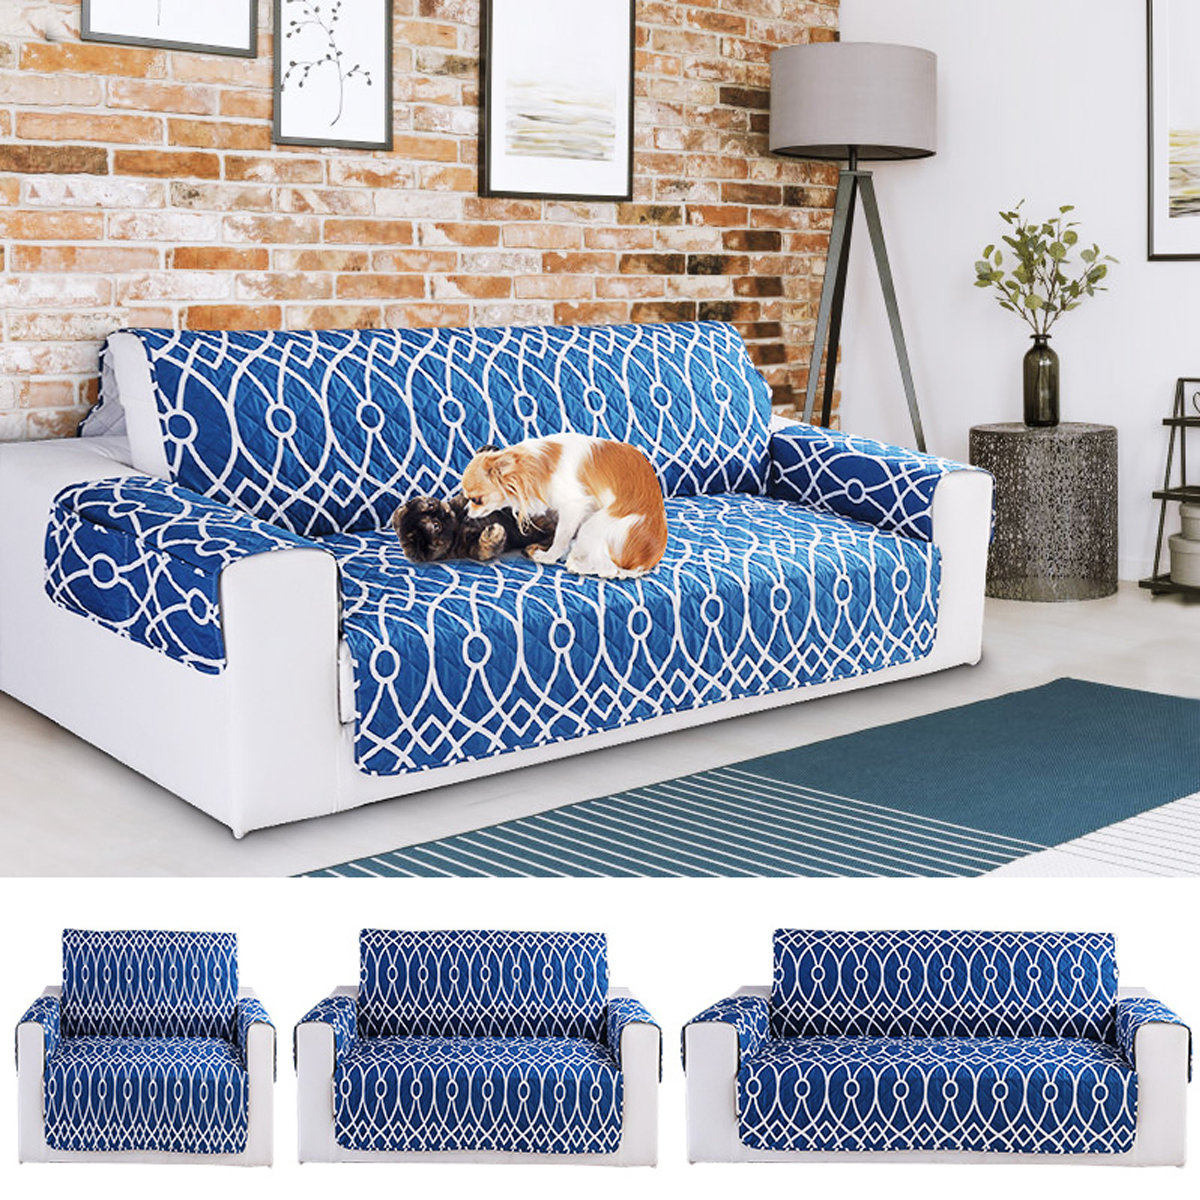 3 asientos Blue Flower Patrón Alfombrilla protectora antirrayas para sofá para mascotas Perro Gato Alfombrilla para sofá